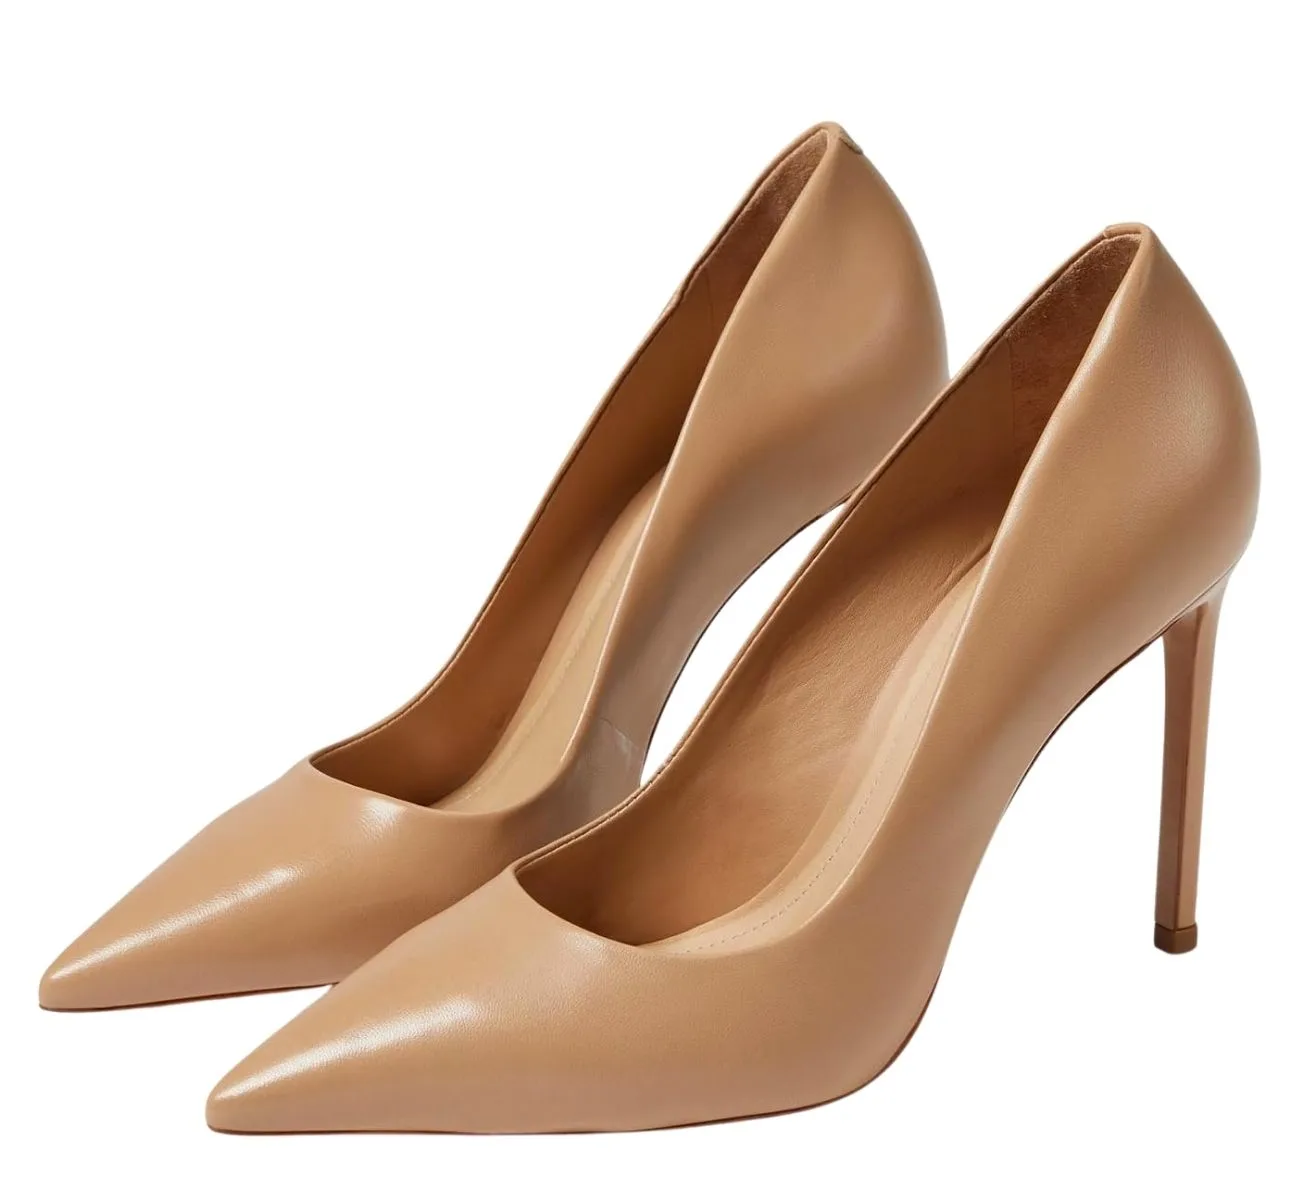 The classic model High heels EURIELLE khaki colors